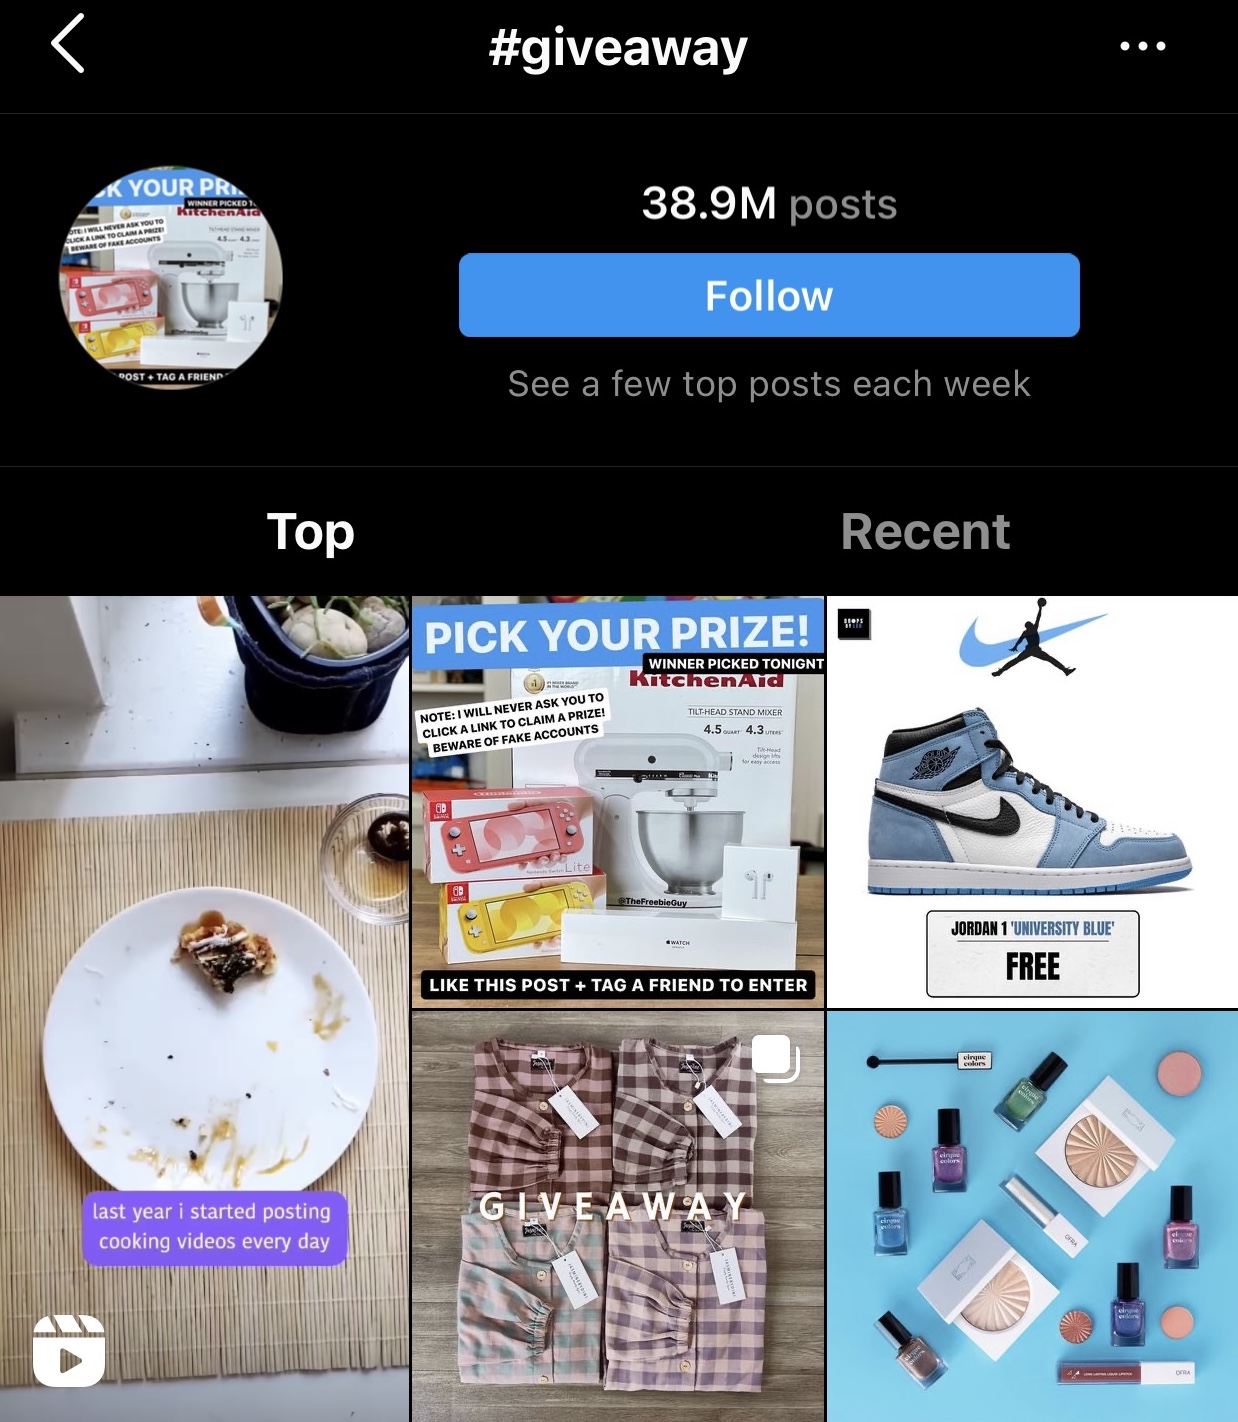 Many brands do giveaways on Instagram.